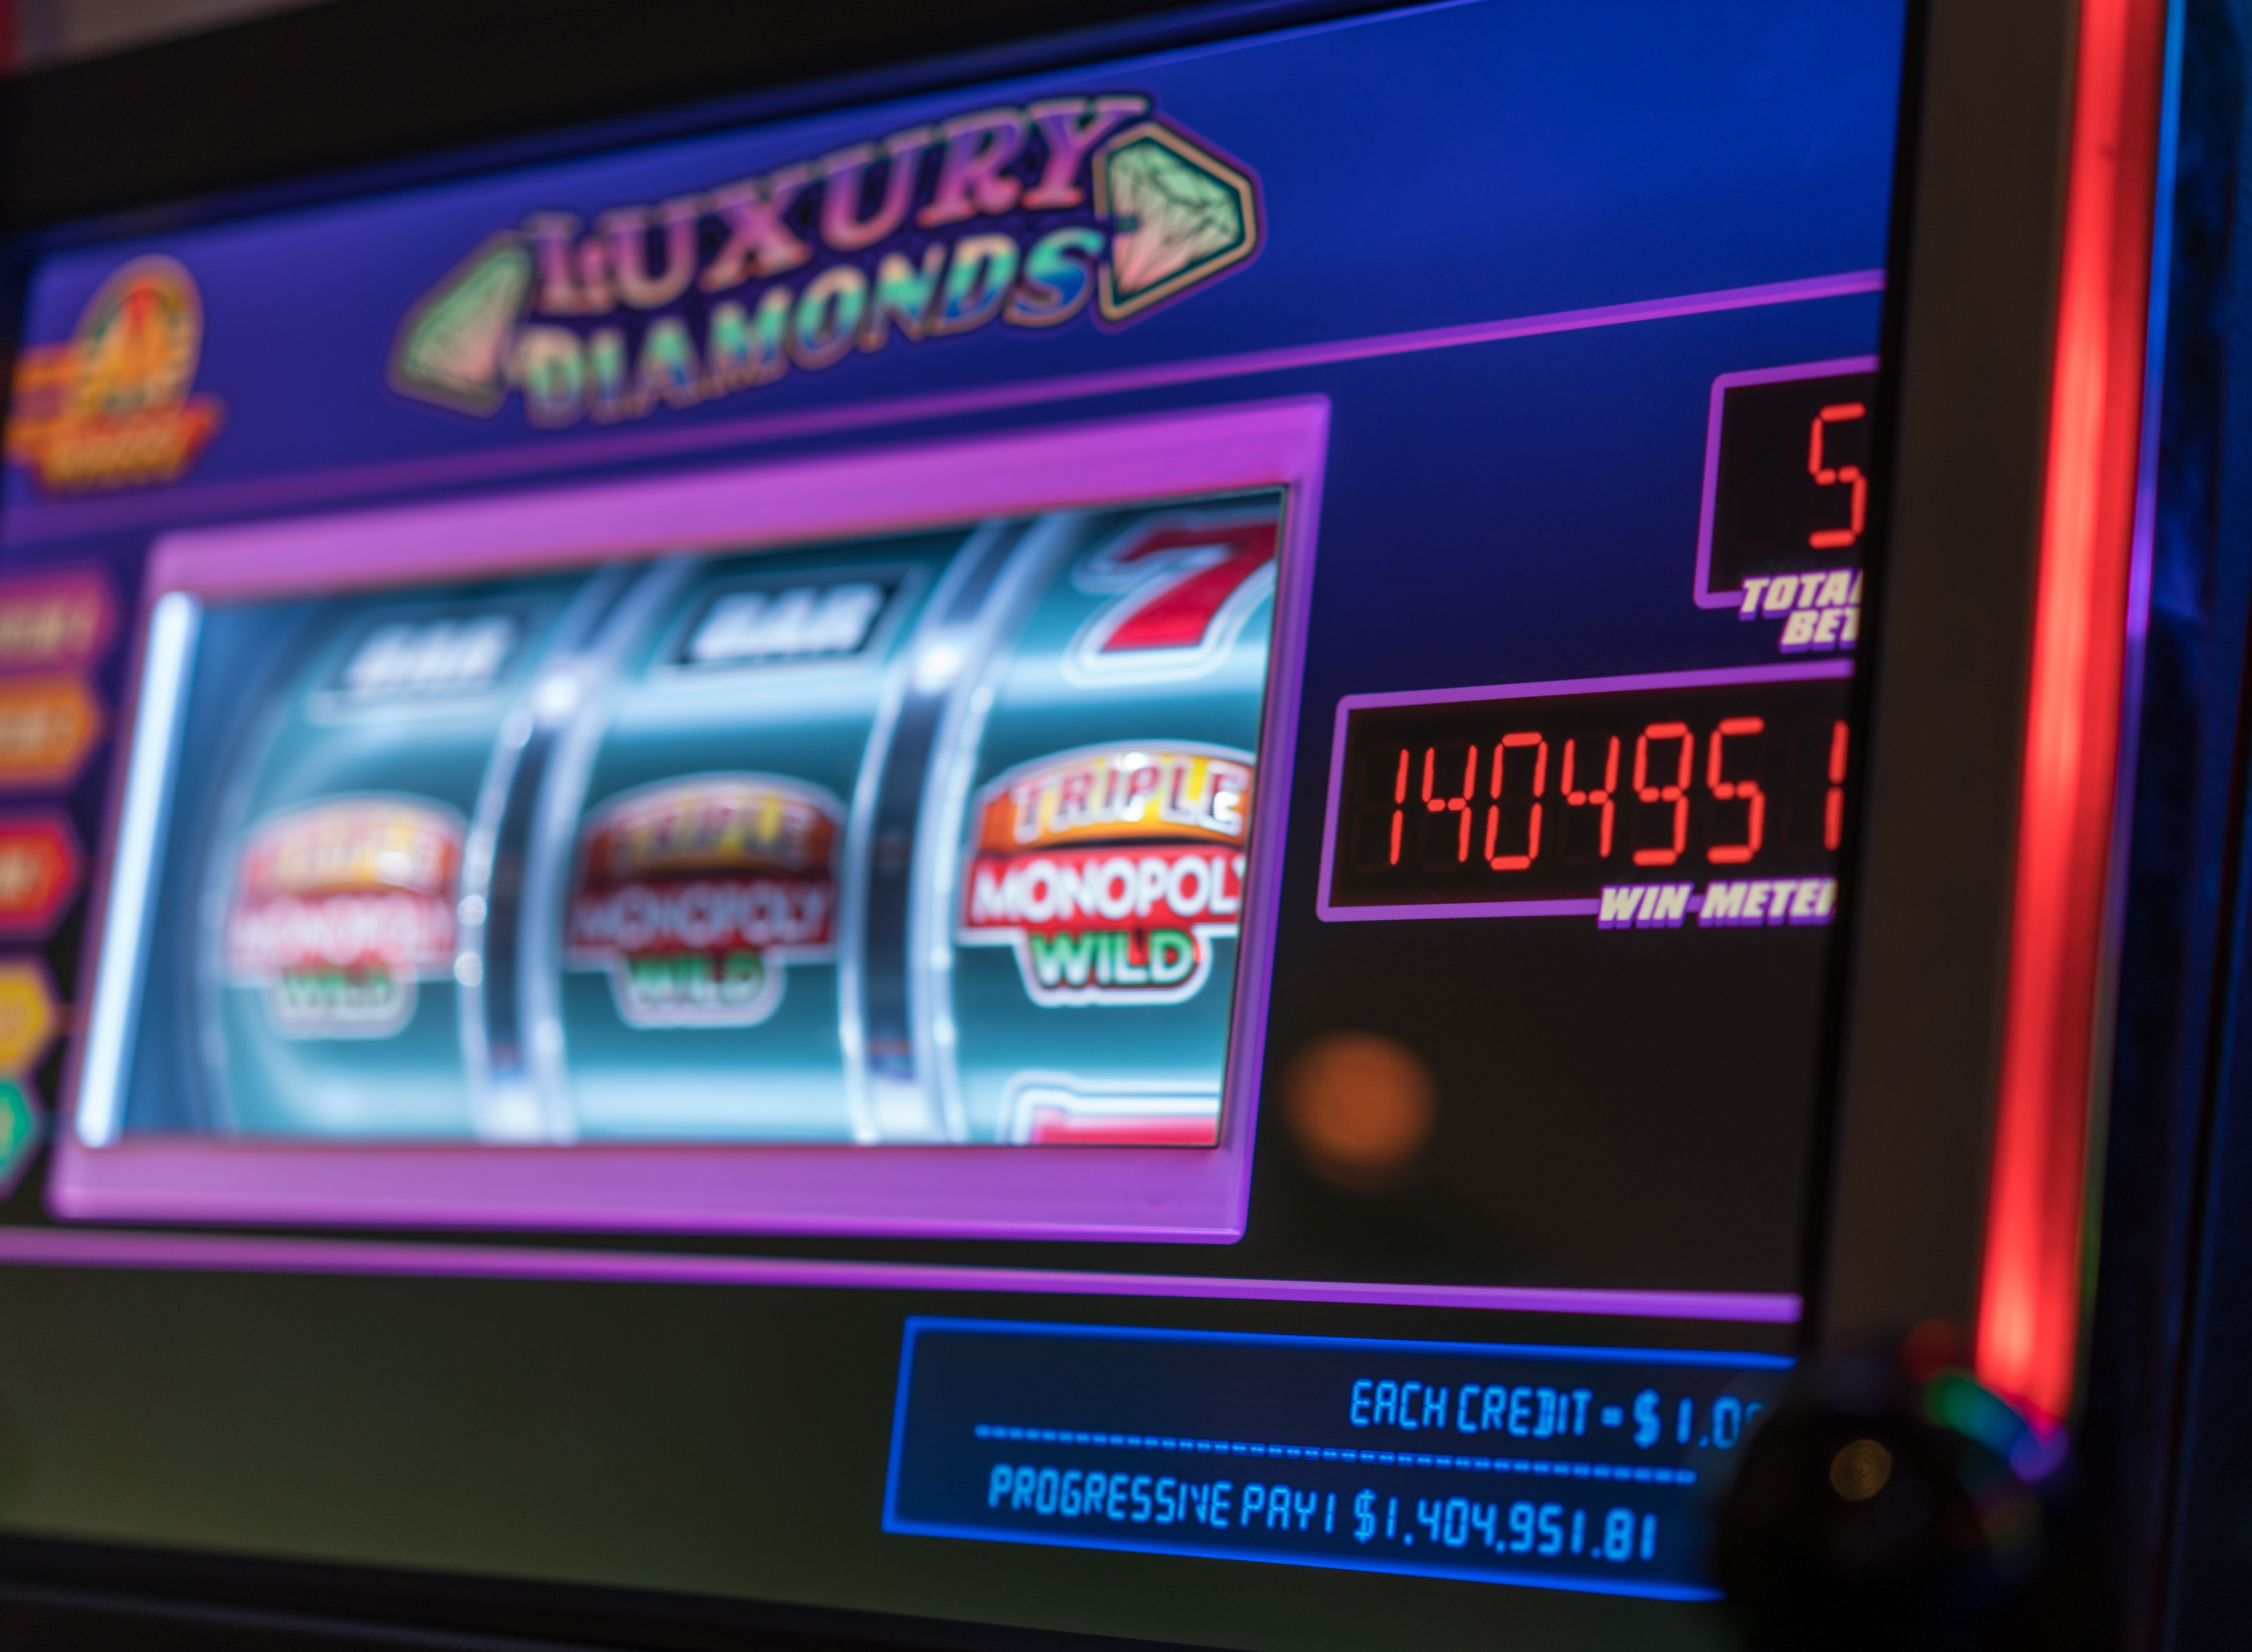 How To Save Money with harrington casino?